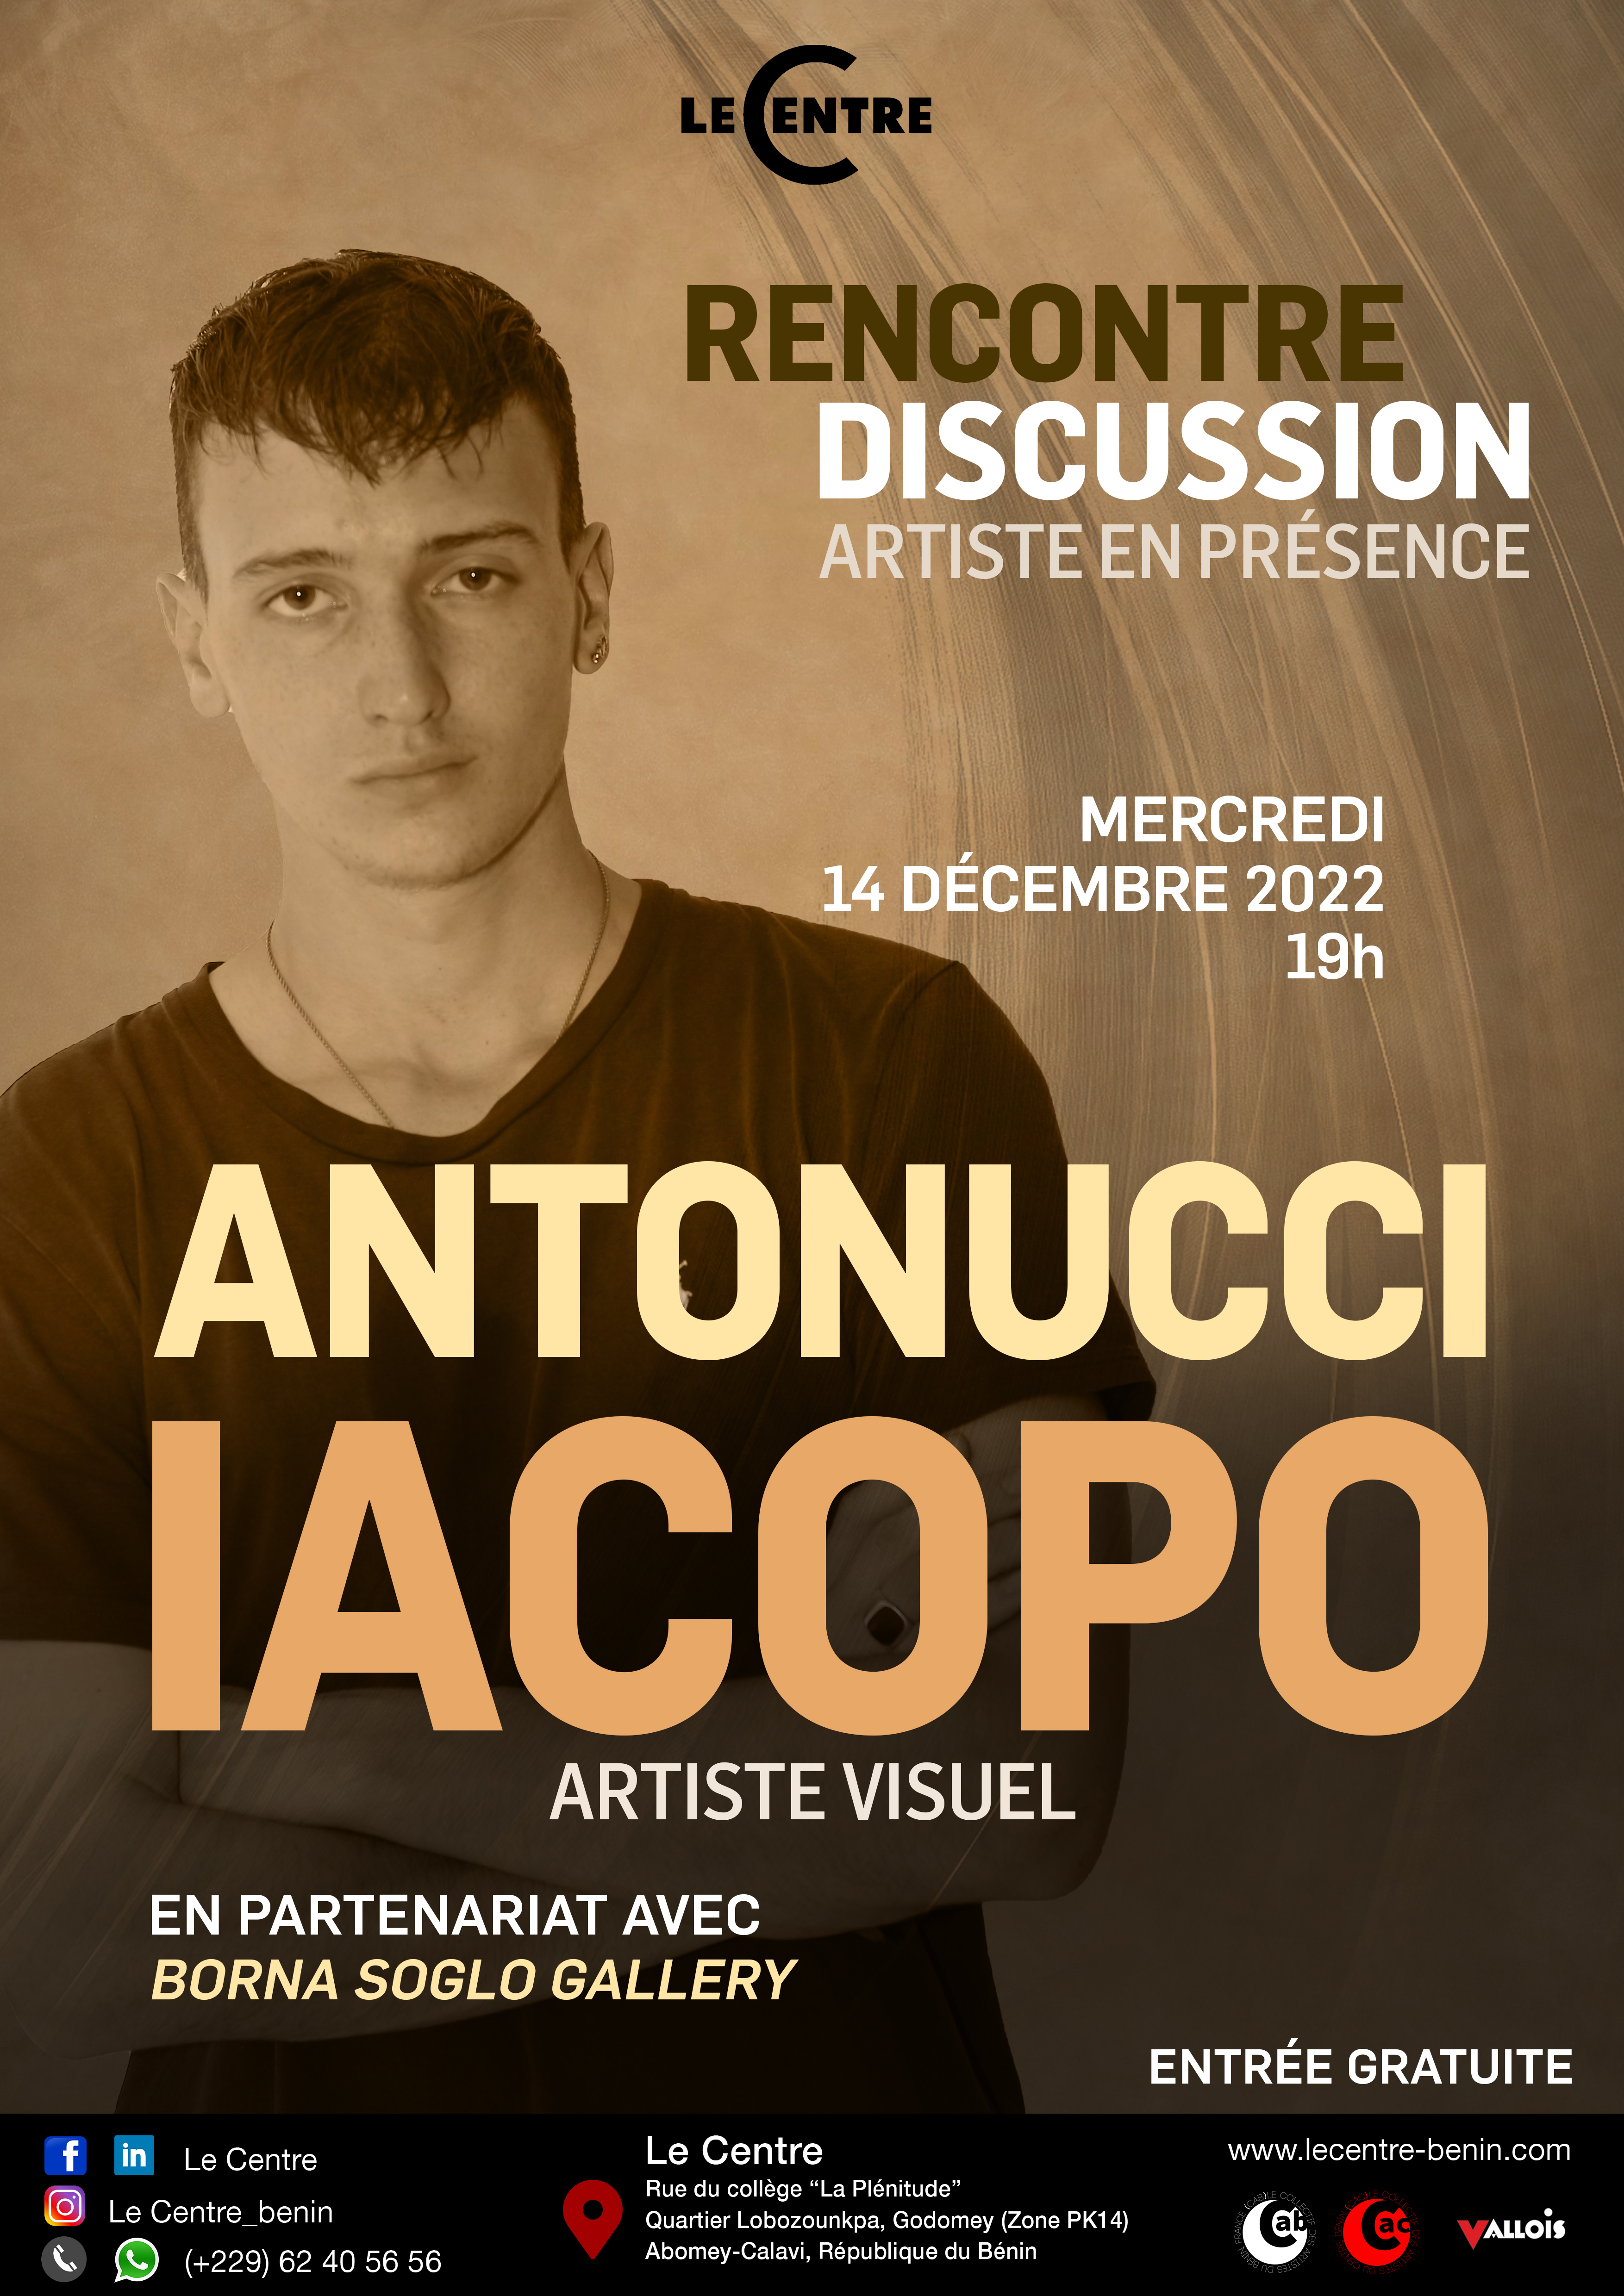 Antonucci Iacopo